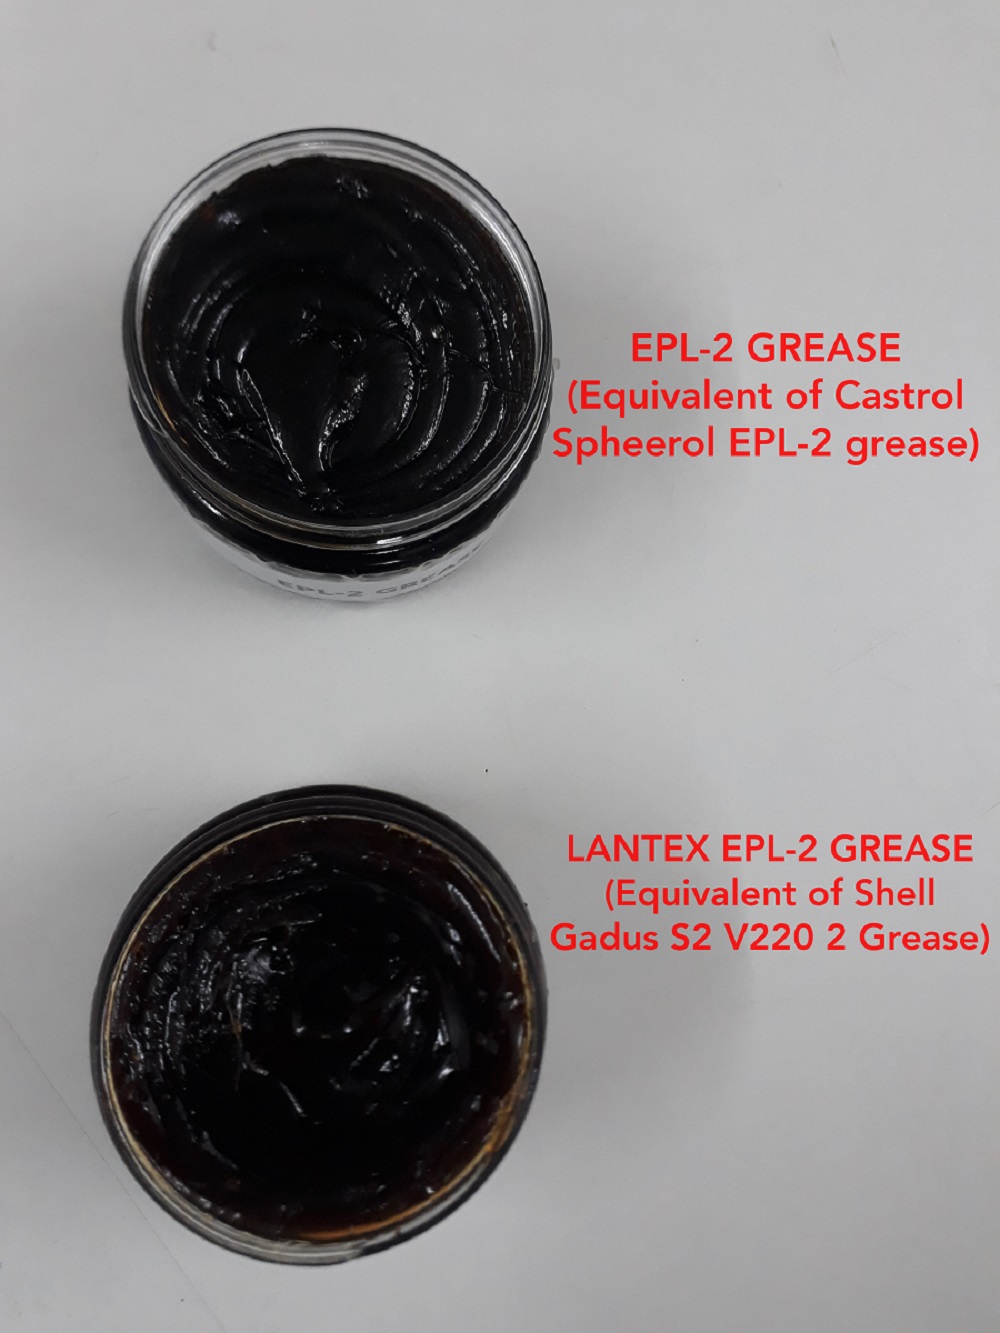 EPL Grease & Lantex EPL Grease (Lithium)